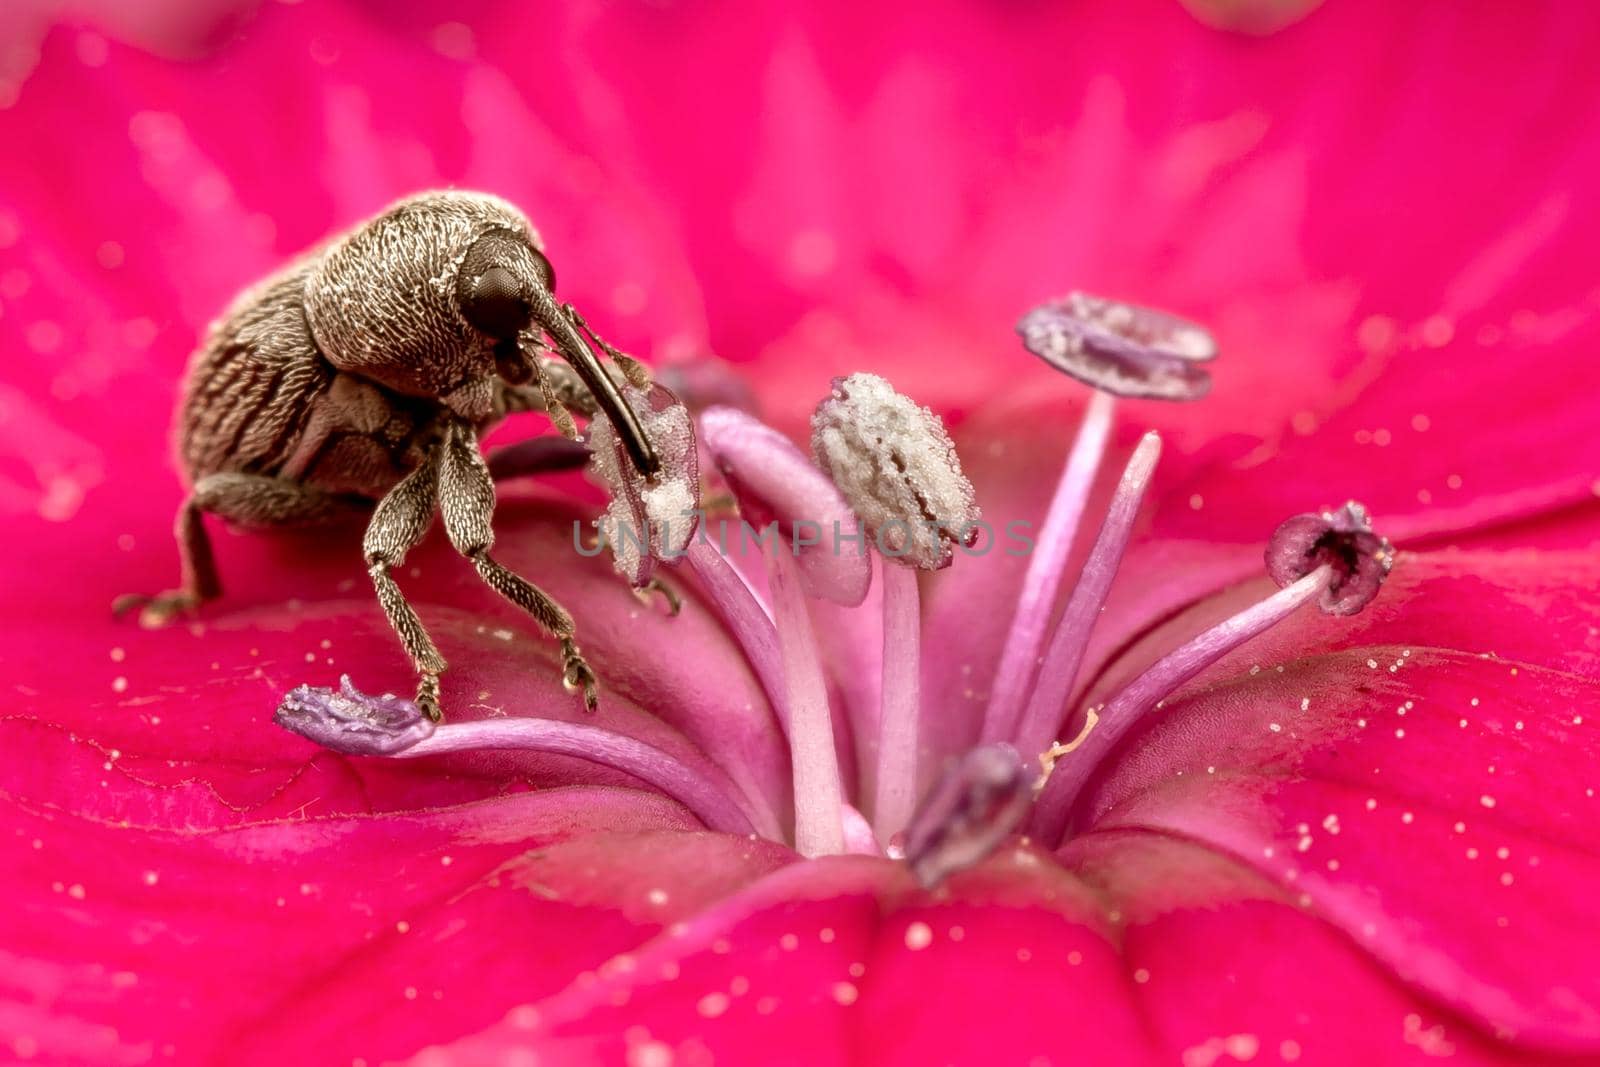 Hylobius eating pollen by Lincikas